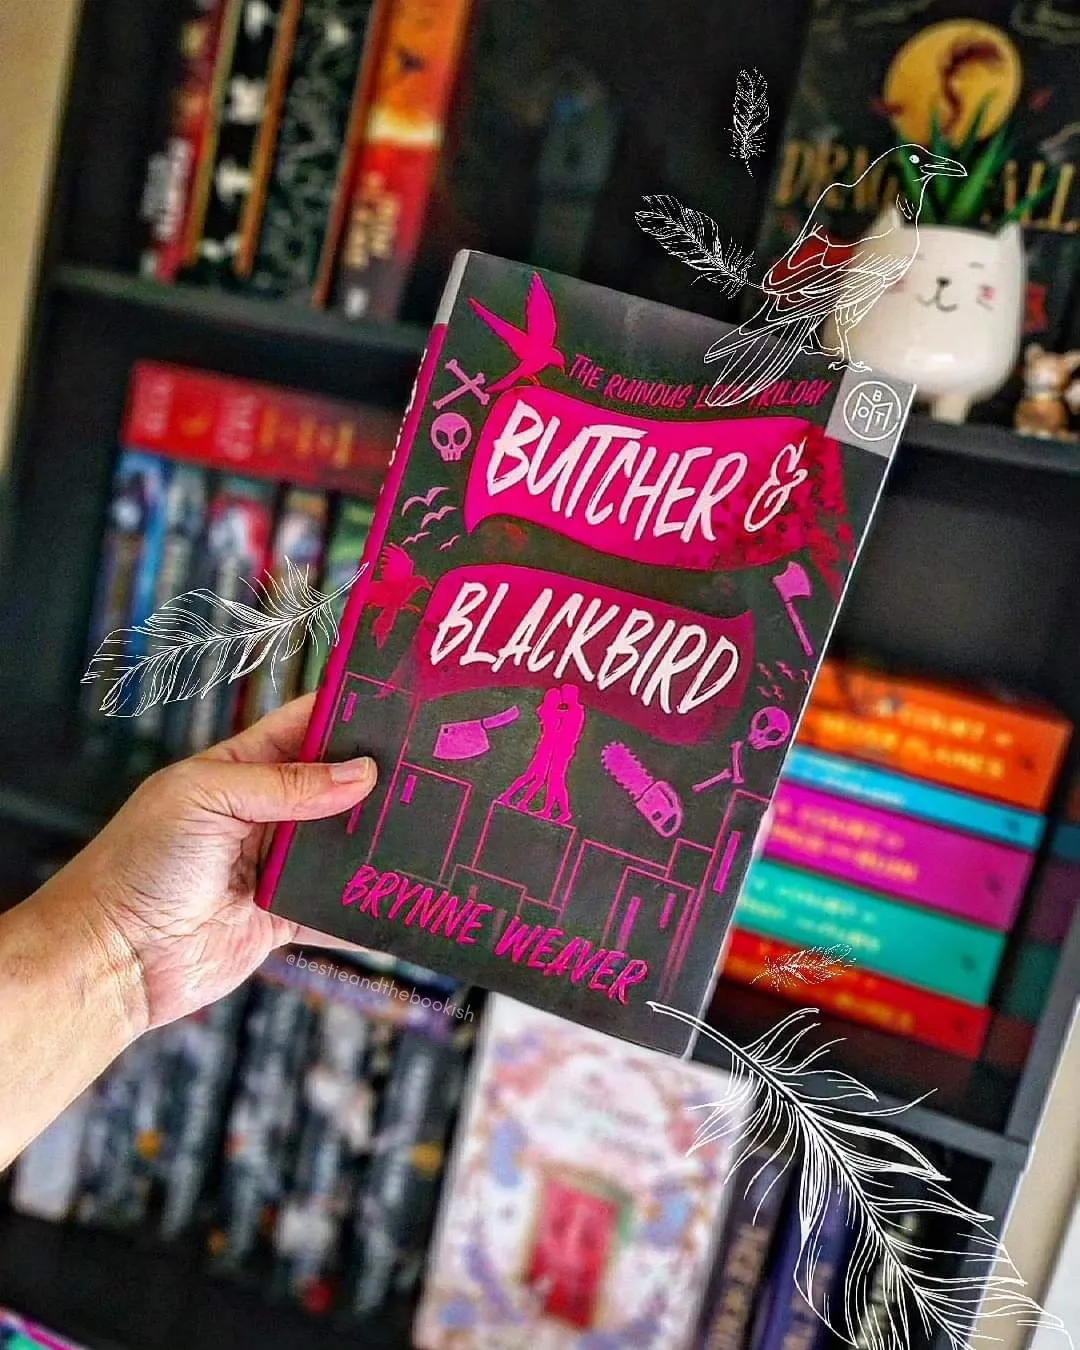  Butcher & Blackbird: The Ruinous Love Trilogy, Book 1 (Audible  Audio Edition): Brynne Weaver, Joe Arden, Lucy Rivers, Blue Nose  Publishing: Audible Books & Originals